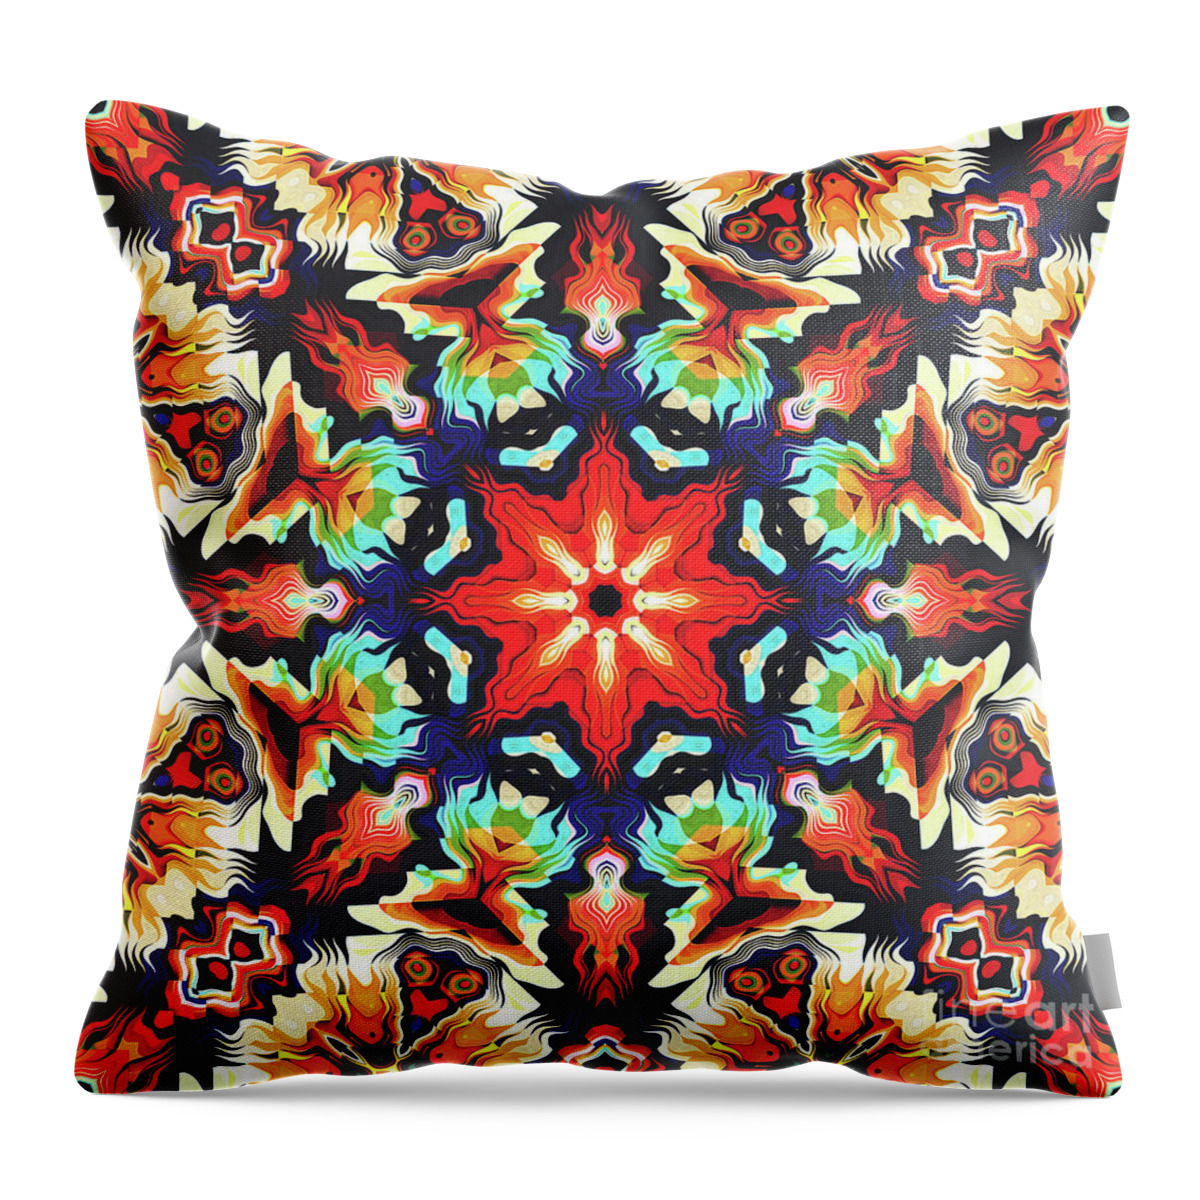 Texture Throw Pillow featuring the digital art Ornate Mandala Motif by Phil Perkins